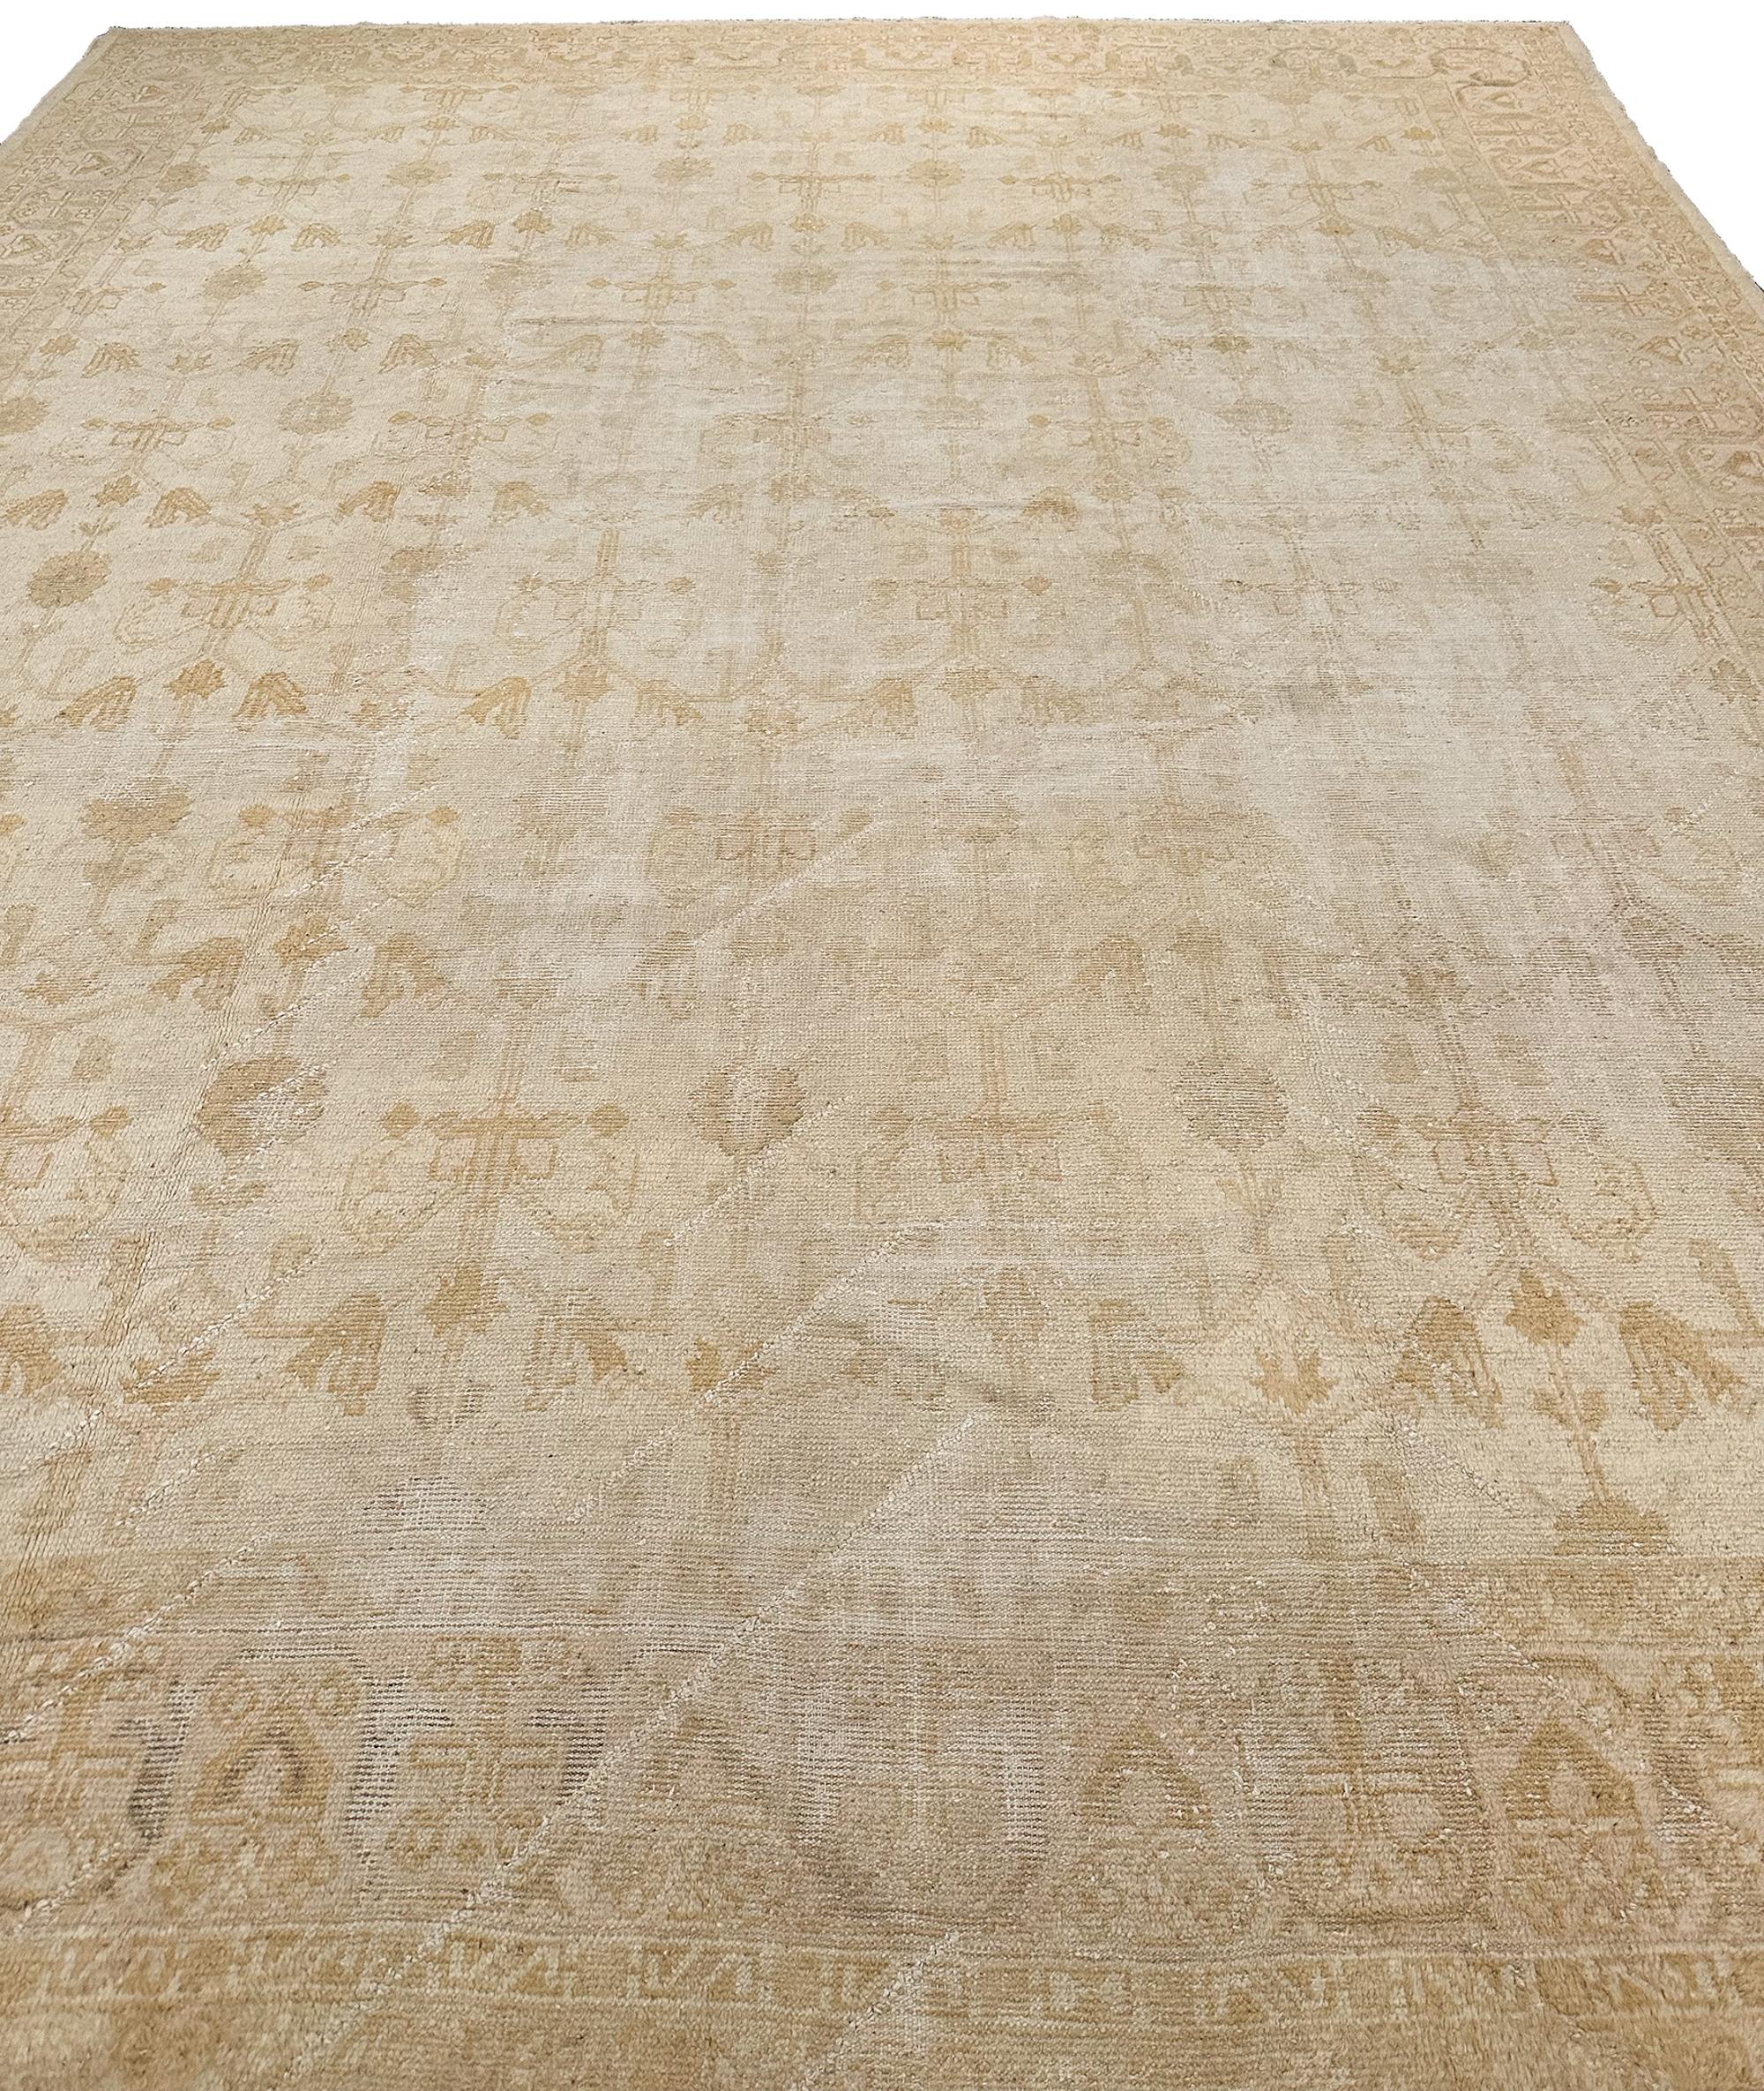 Wool 1880 Auhtentic Antique Turkish Oushak Geometric overall 12x15 366cm x 442cm For Sale